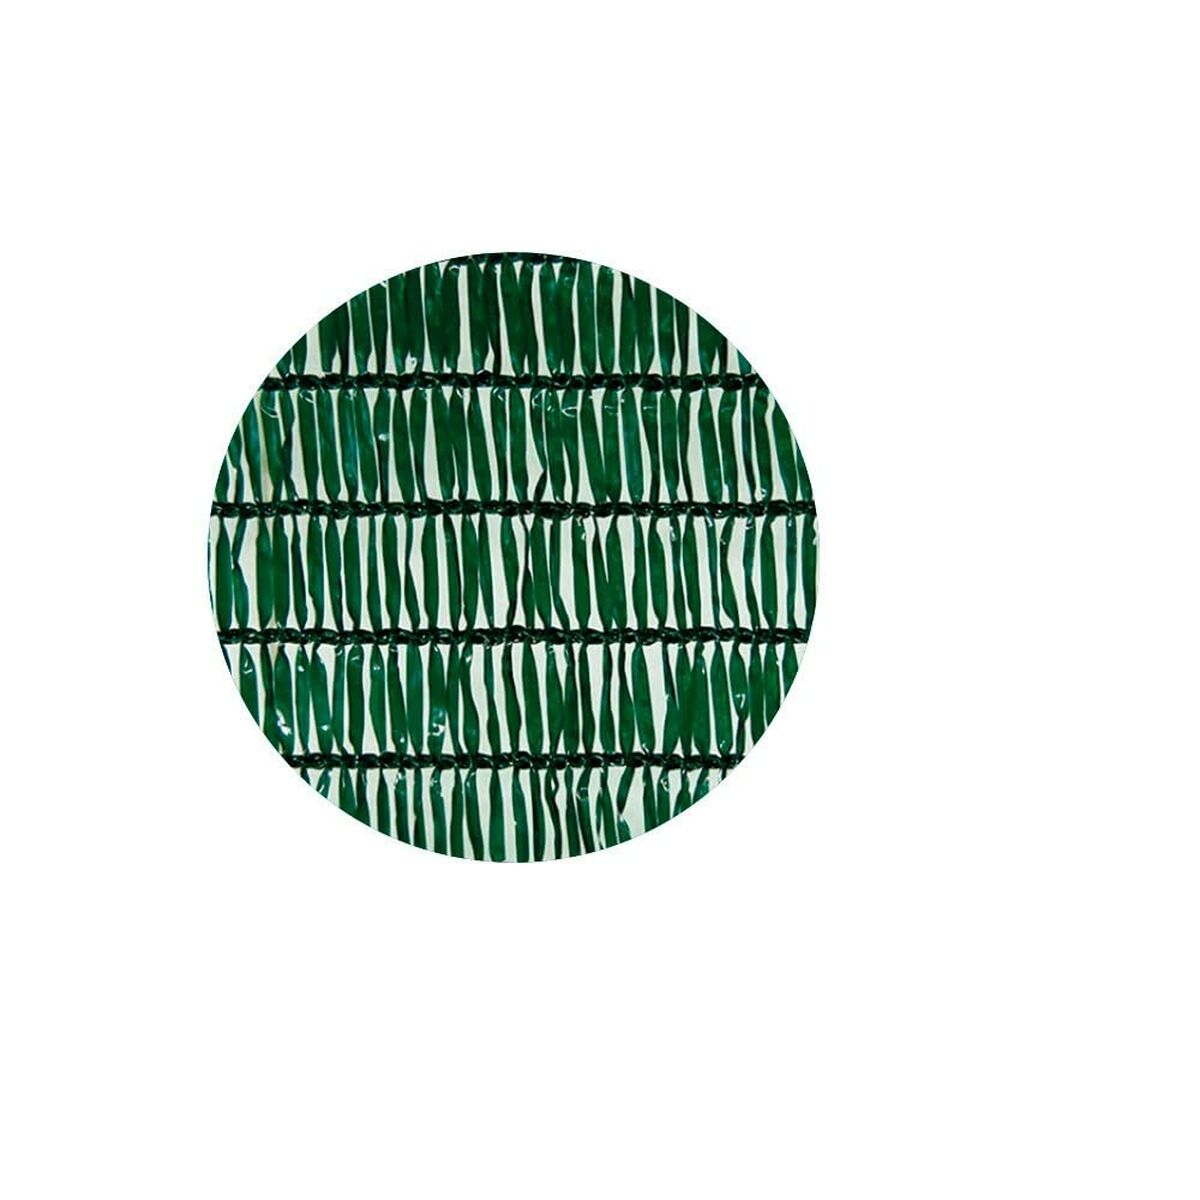 edm concealment mesh roll green polypropylene 70 % (2 x 100 m)